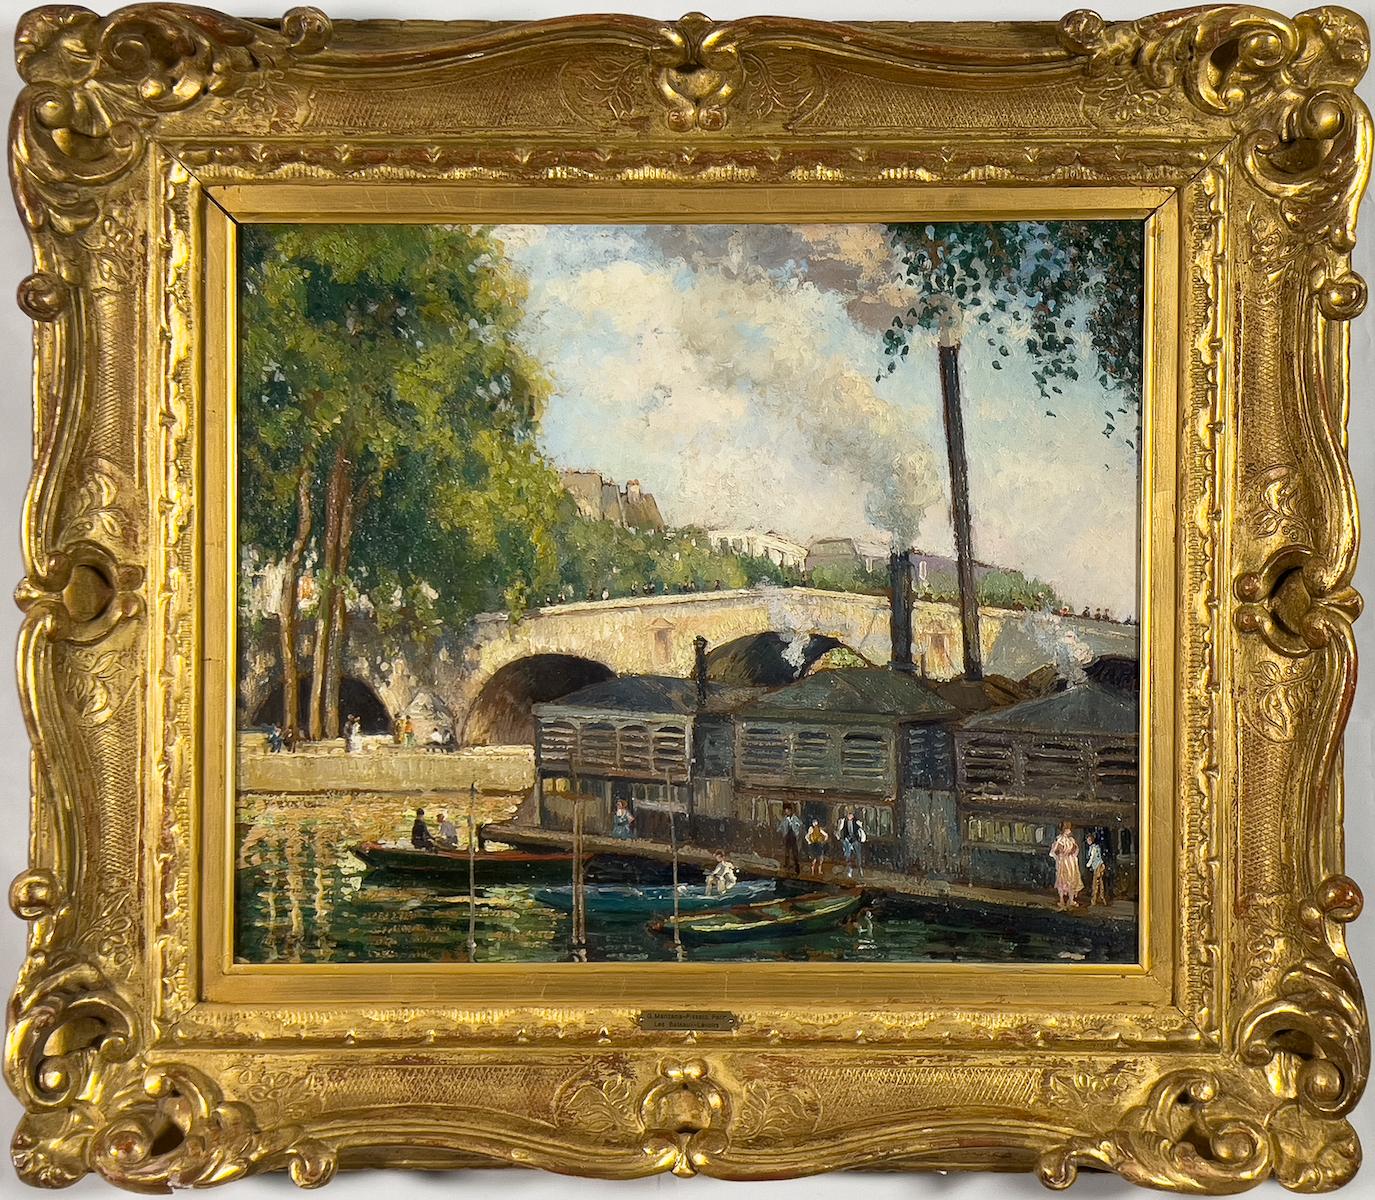 Les Bateaux Lavoir, Paris, von Georges Manzana Pissarro – Flussss-Szene – Painting von Georges Henri Manzana Pissarro